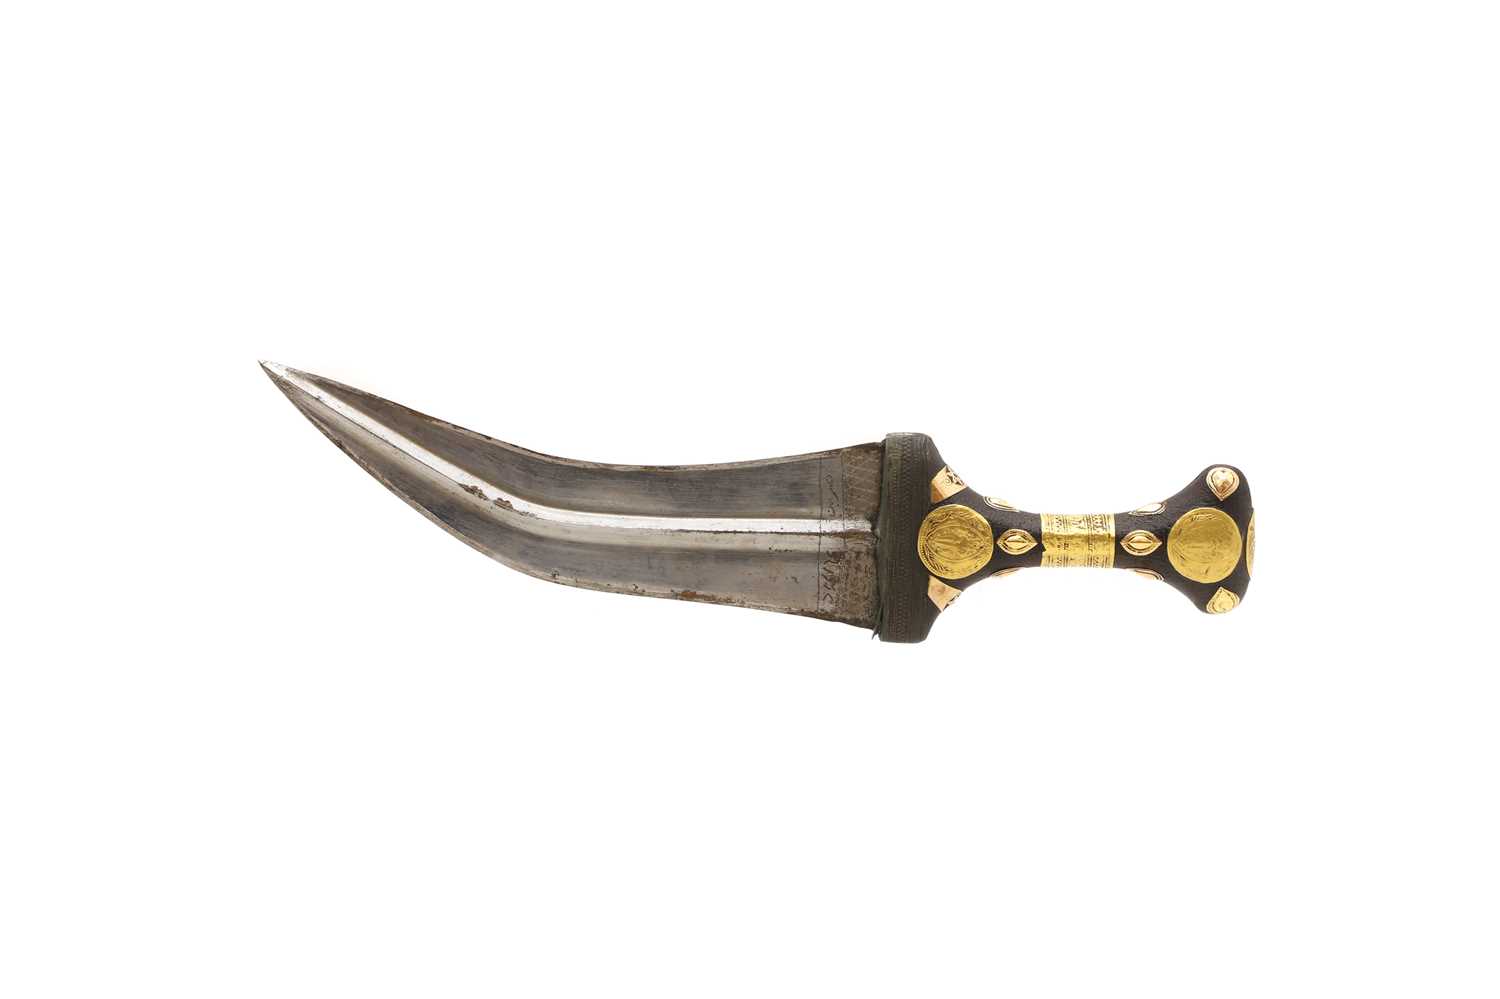 Lot A Syrian gold and silver mounted Jambiya dagger